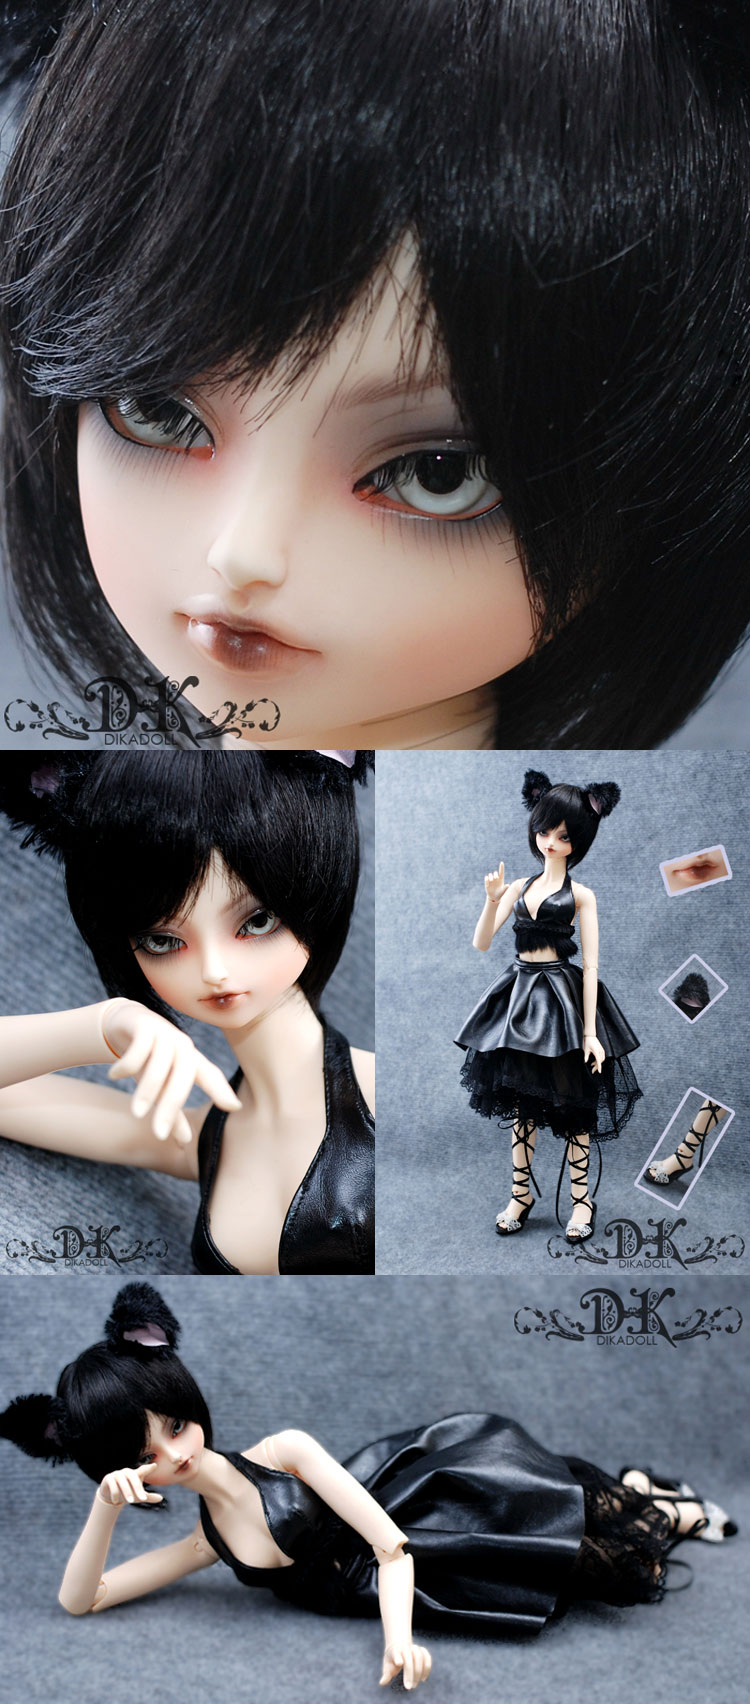 BJD Princess of Kurashasa 56.5cm girl Boll-jointed doll